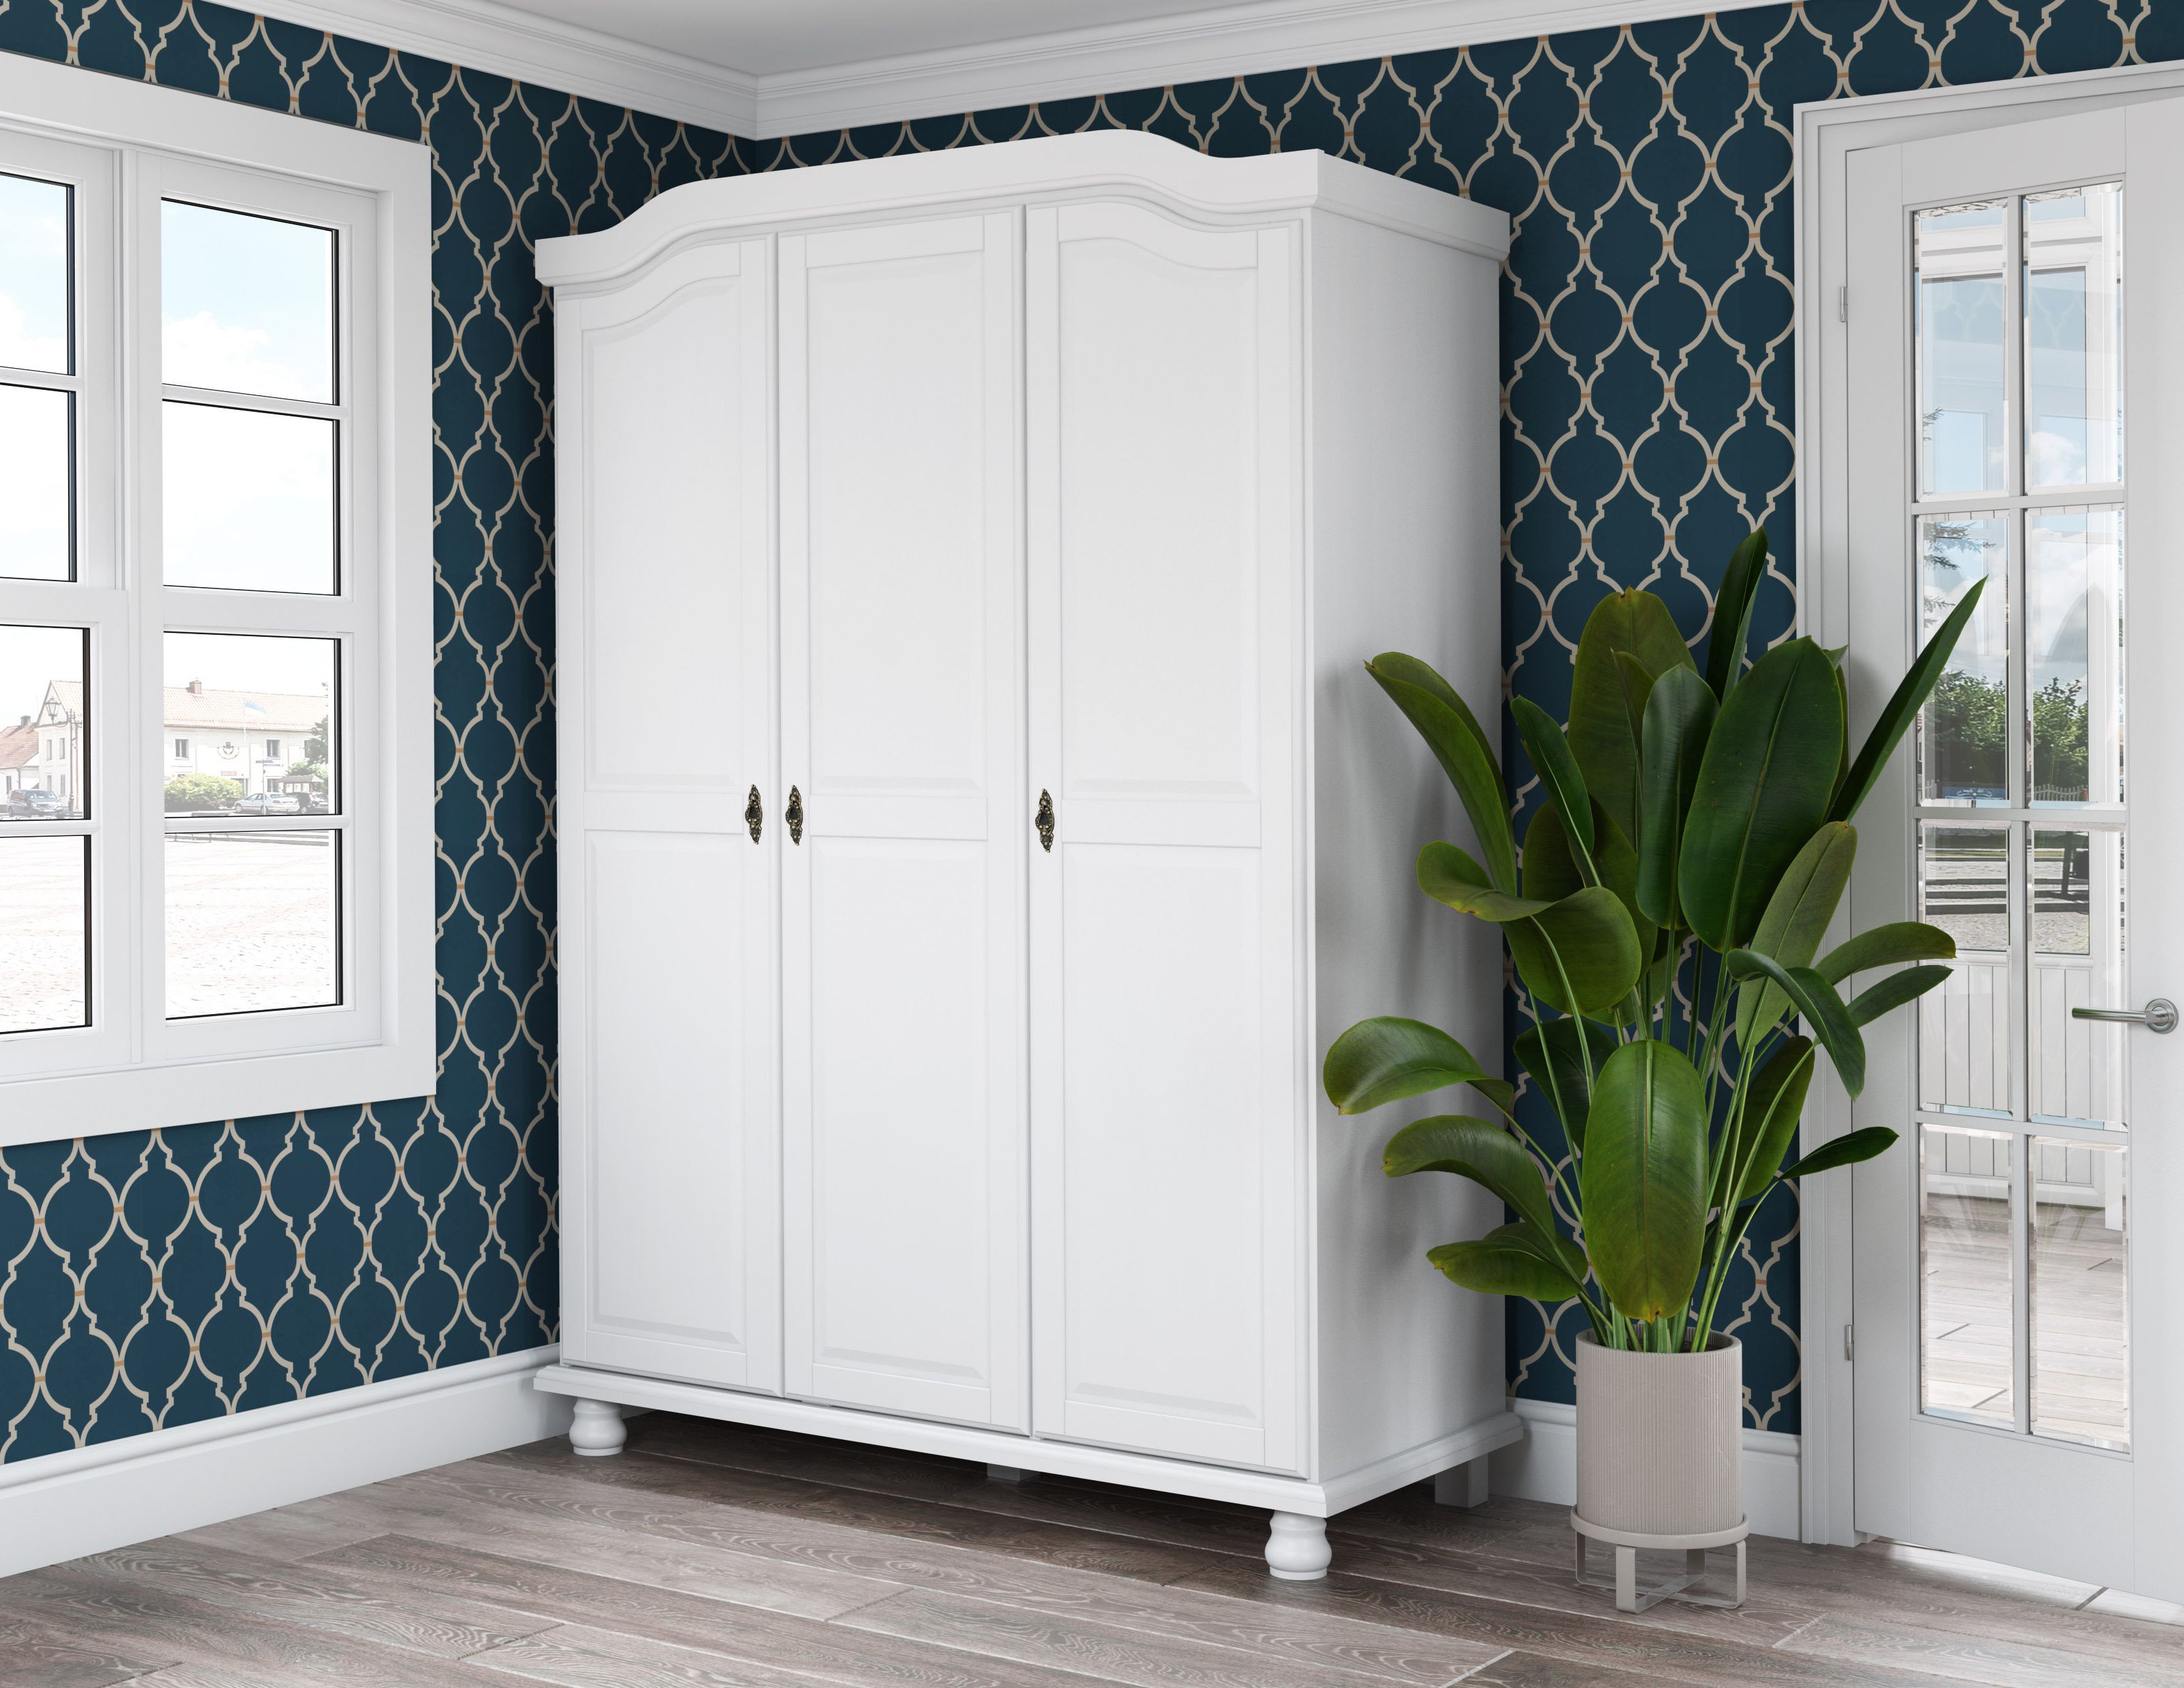 Charlton Home® Kyle 100% Solid Wood 3 Door Wardrobe Armoire & Reviews |  Wayfair Regarding 3 Door Wardrobes With Drawers And Shelves (Gallery 10 of 20)